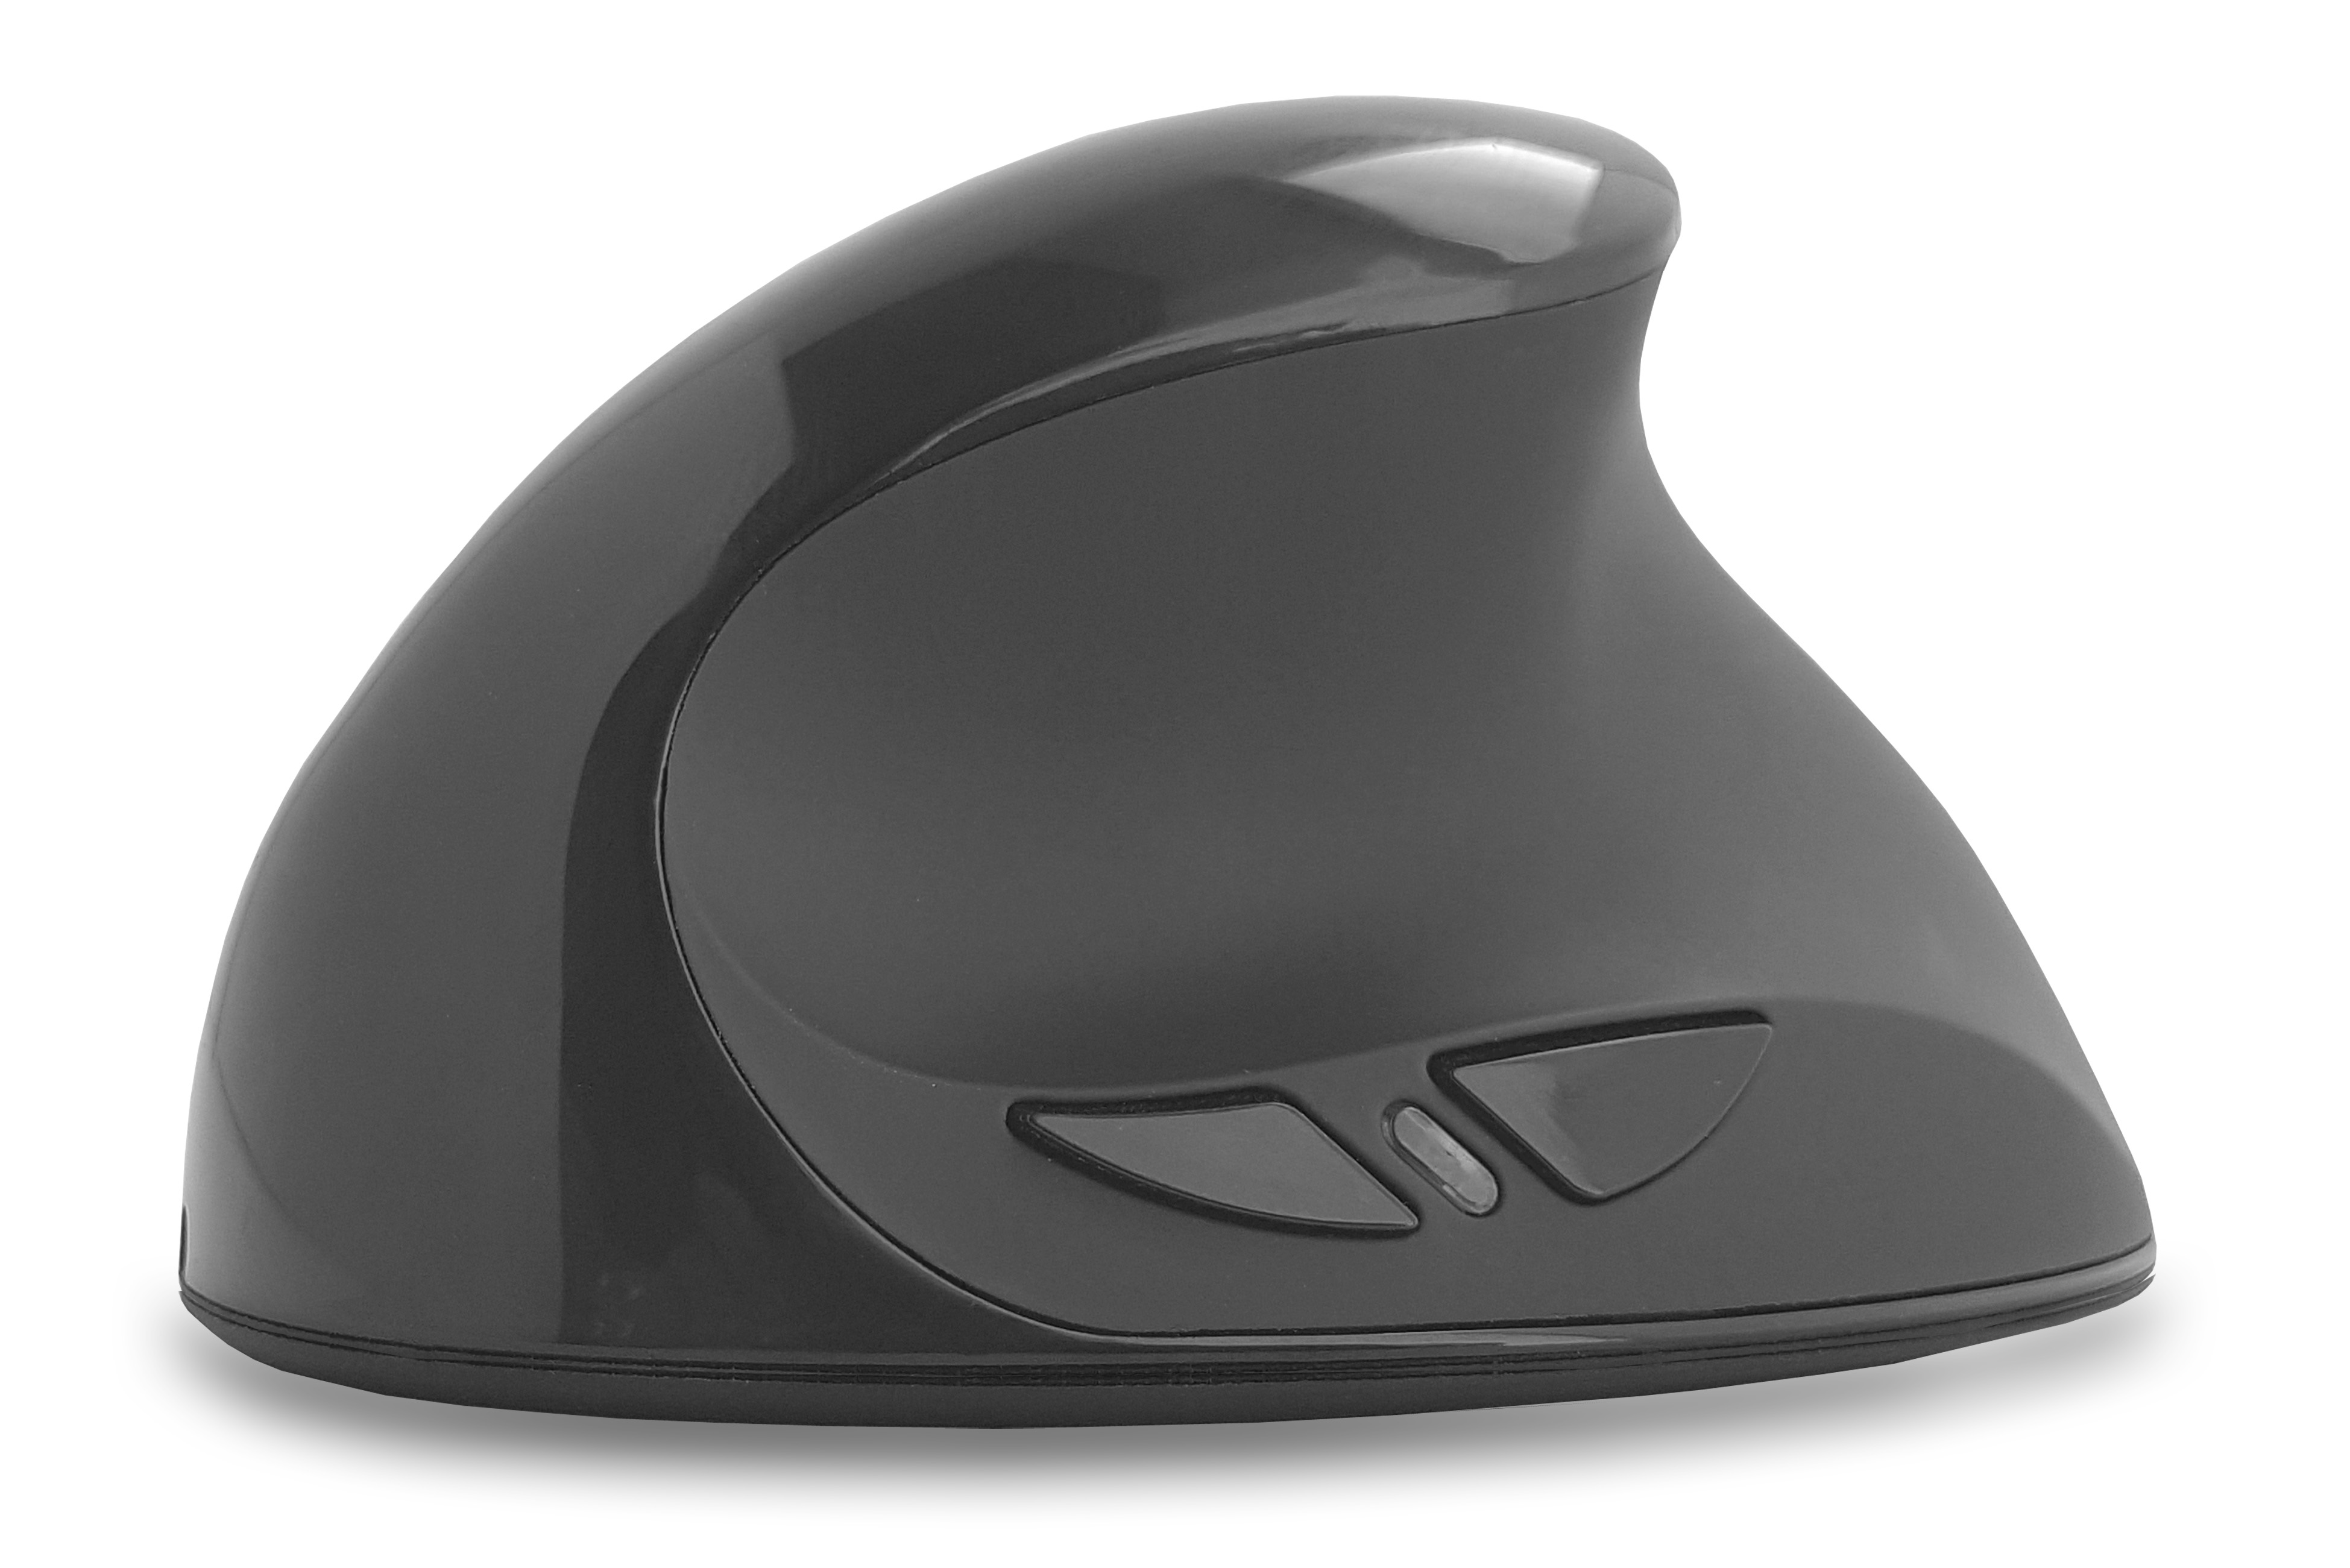 JENIMAGE JI-CW-01 Rechtshänder Wireless Kabellos Maus, Rechts ergonomische schwarz